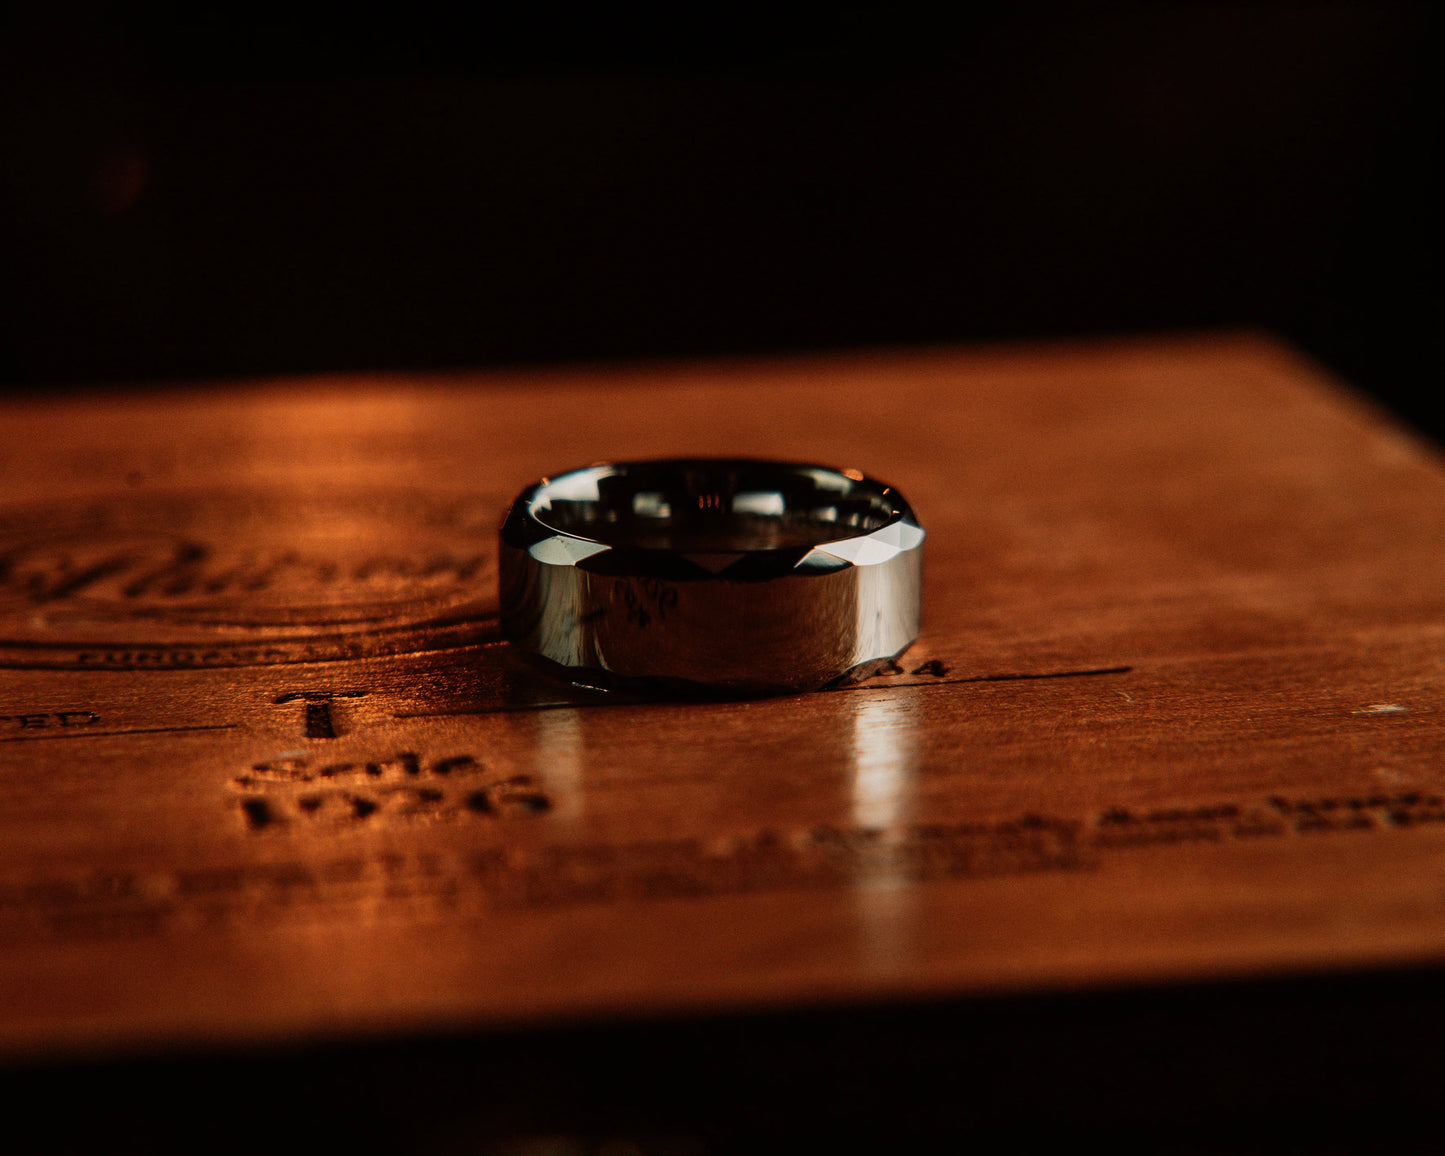 The "Draper" Ring